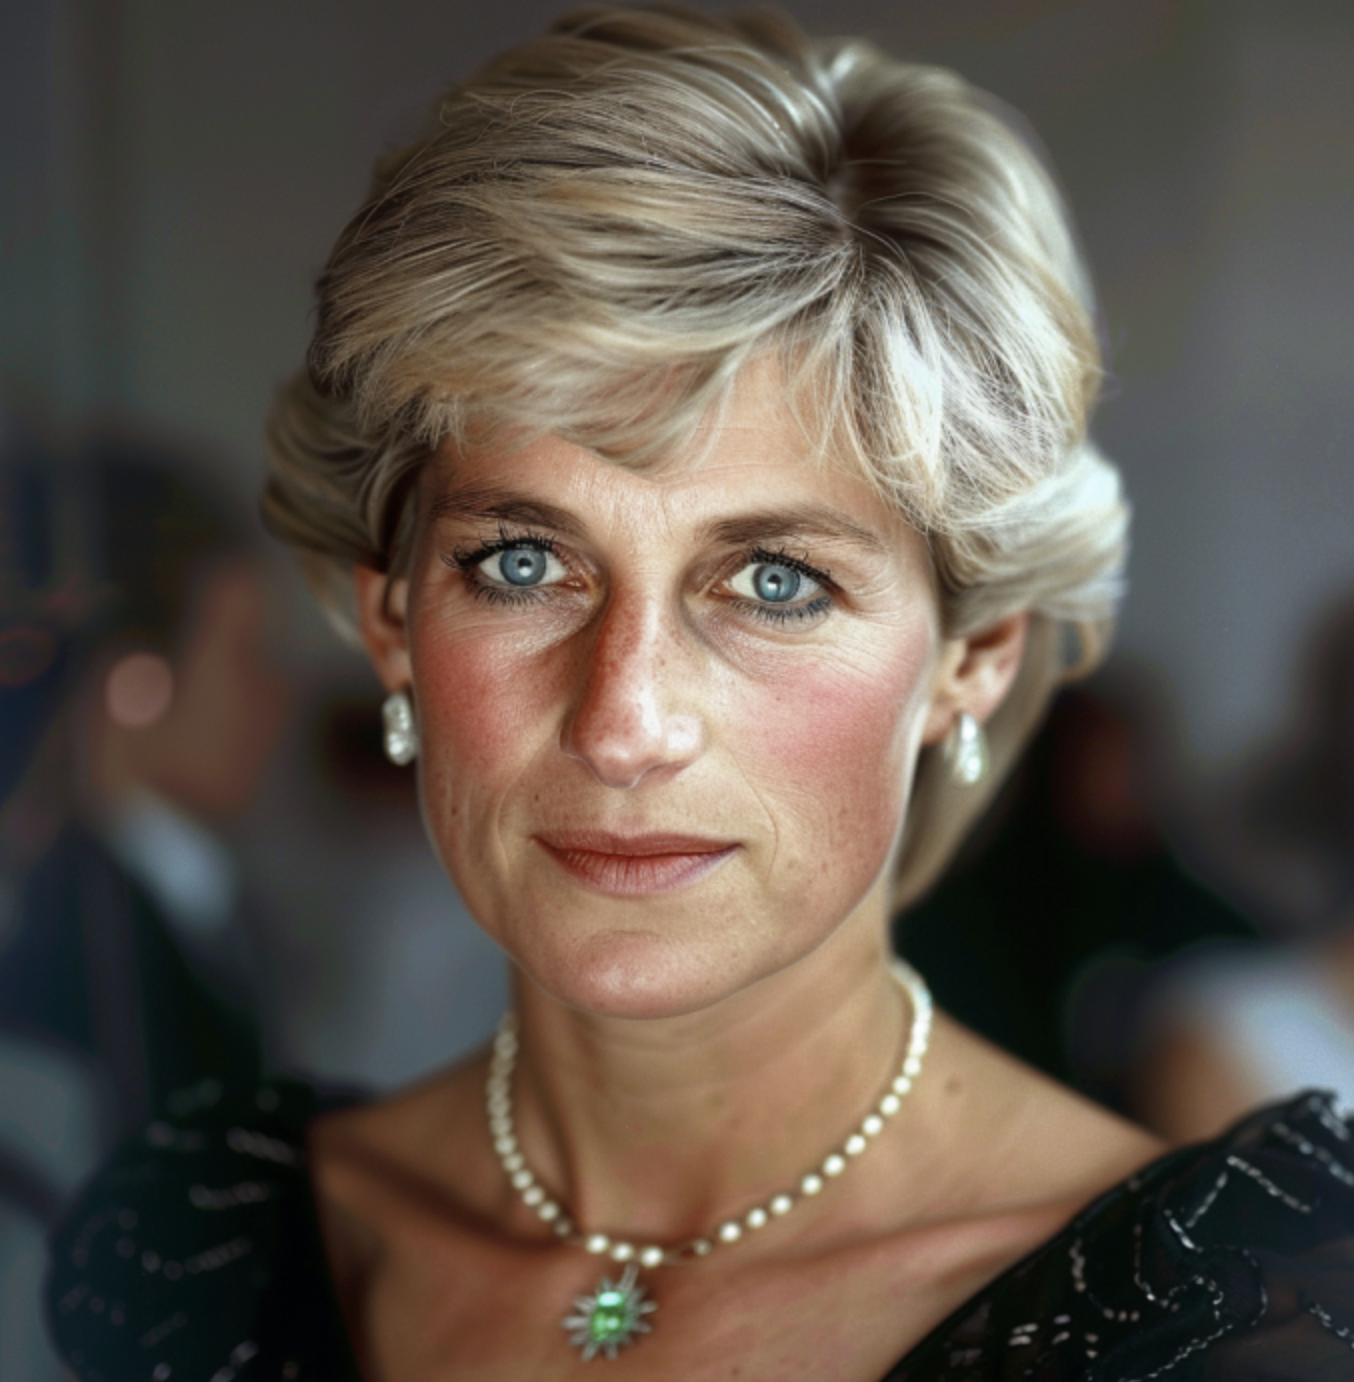 Image IA de la princesse Diana dans sa vieillesse | Source : Midjourney